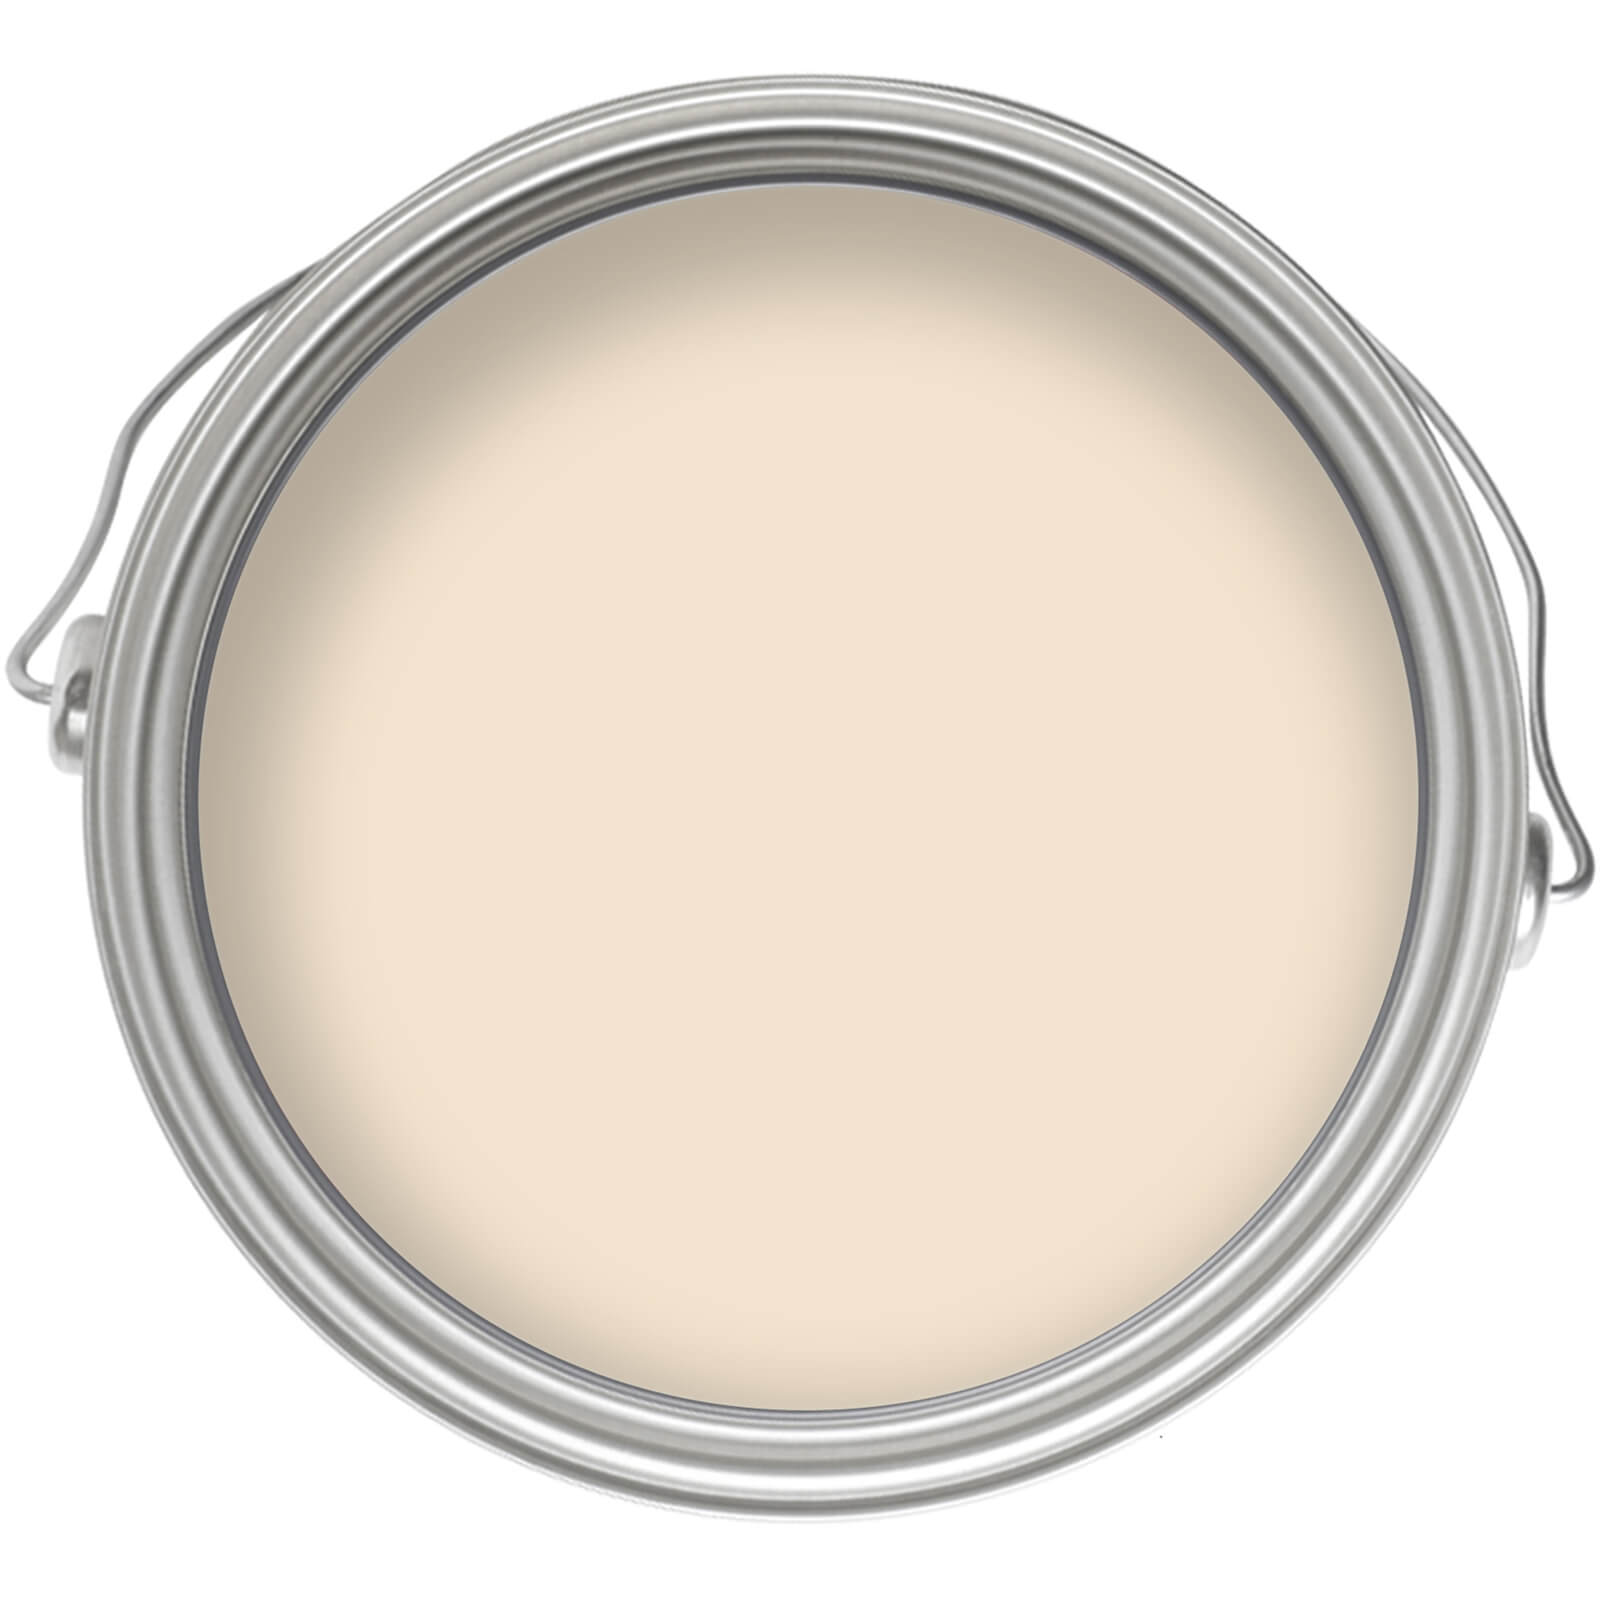 Homebase Smooth Masonry Colour Paint Tester - Magnolia 250ml